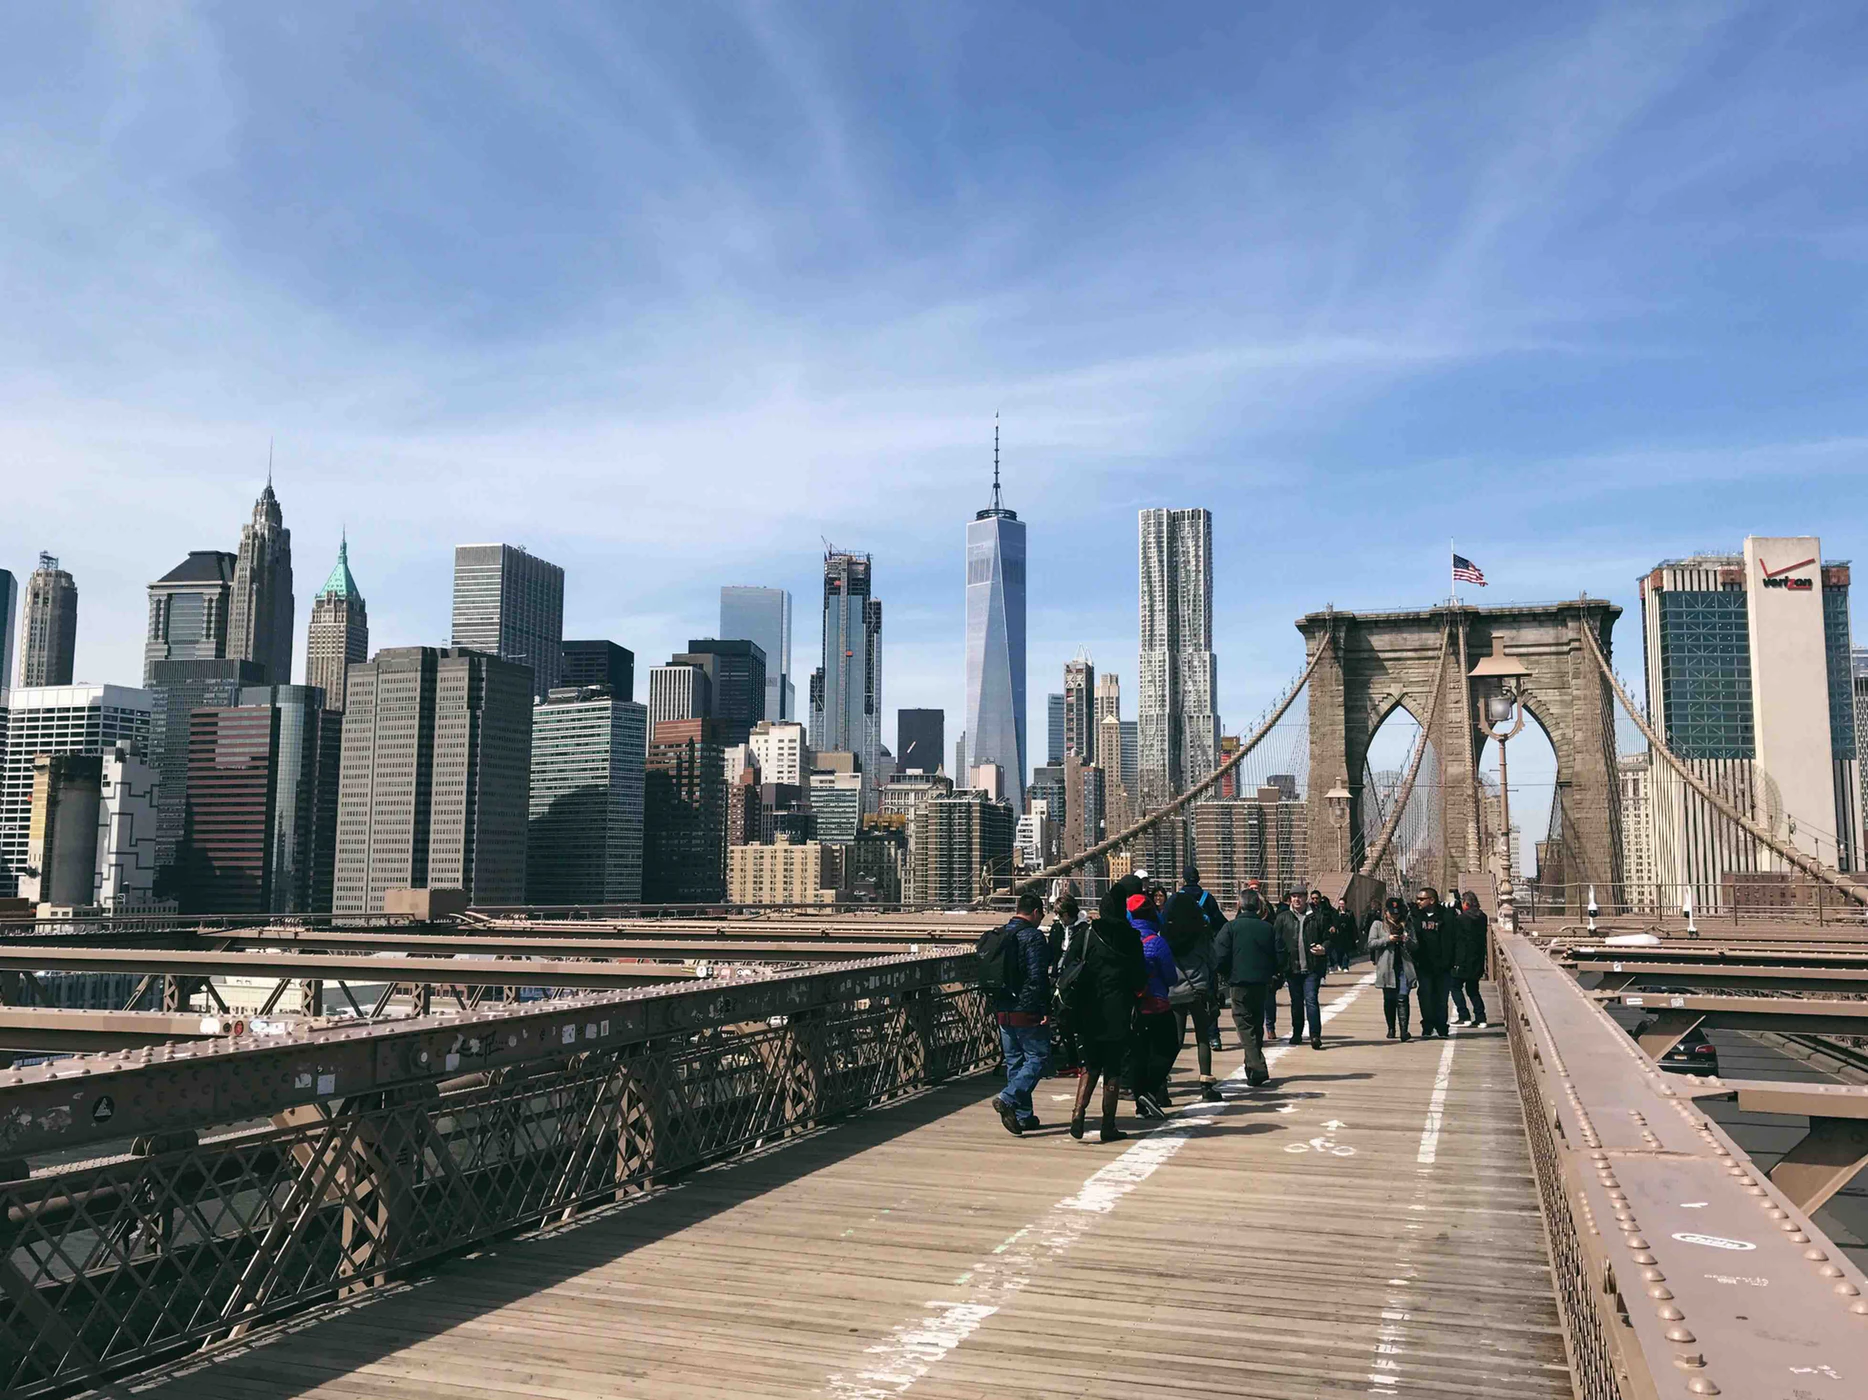 The original Brooklyn Bridge with some pedestrians.